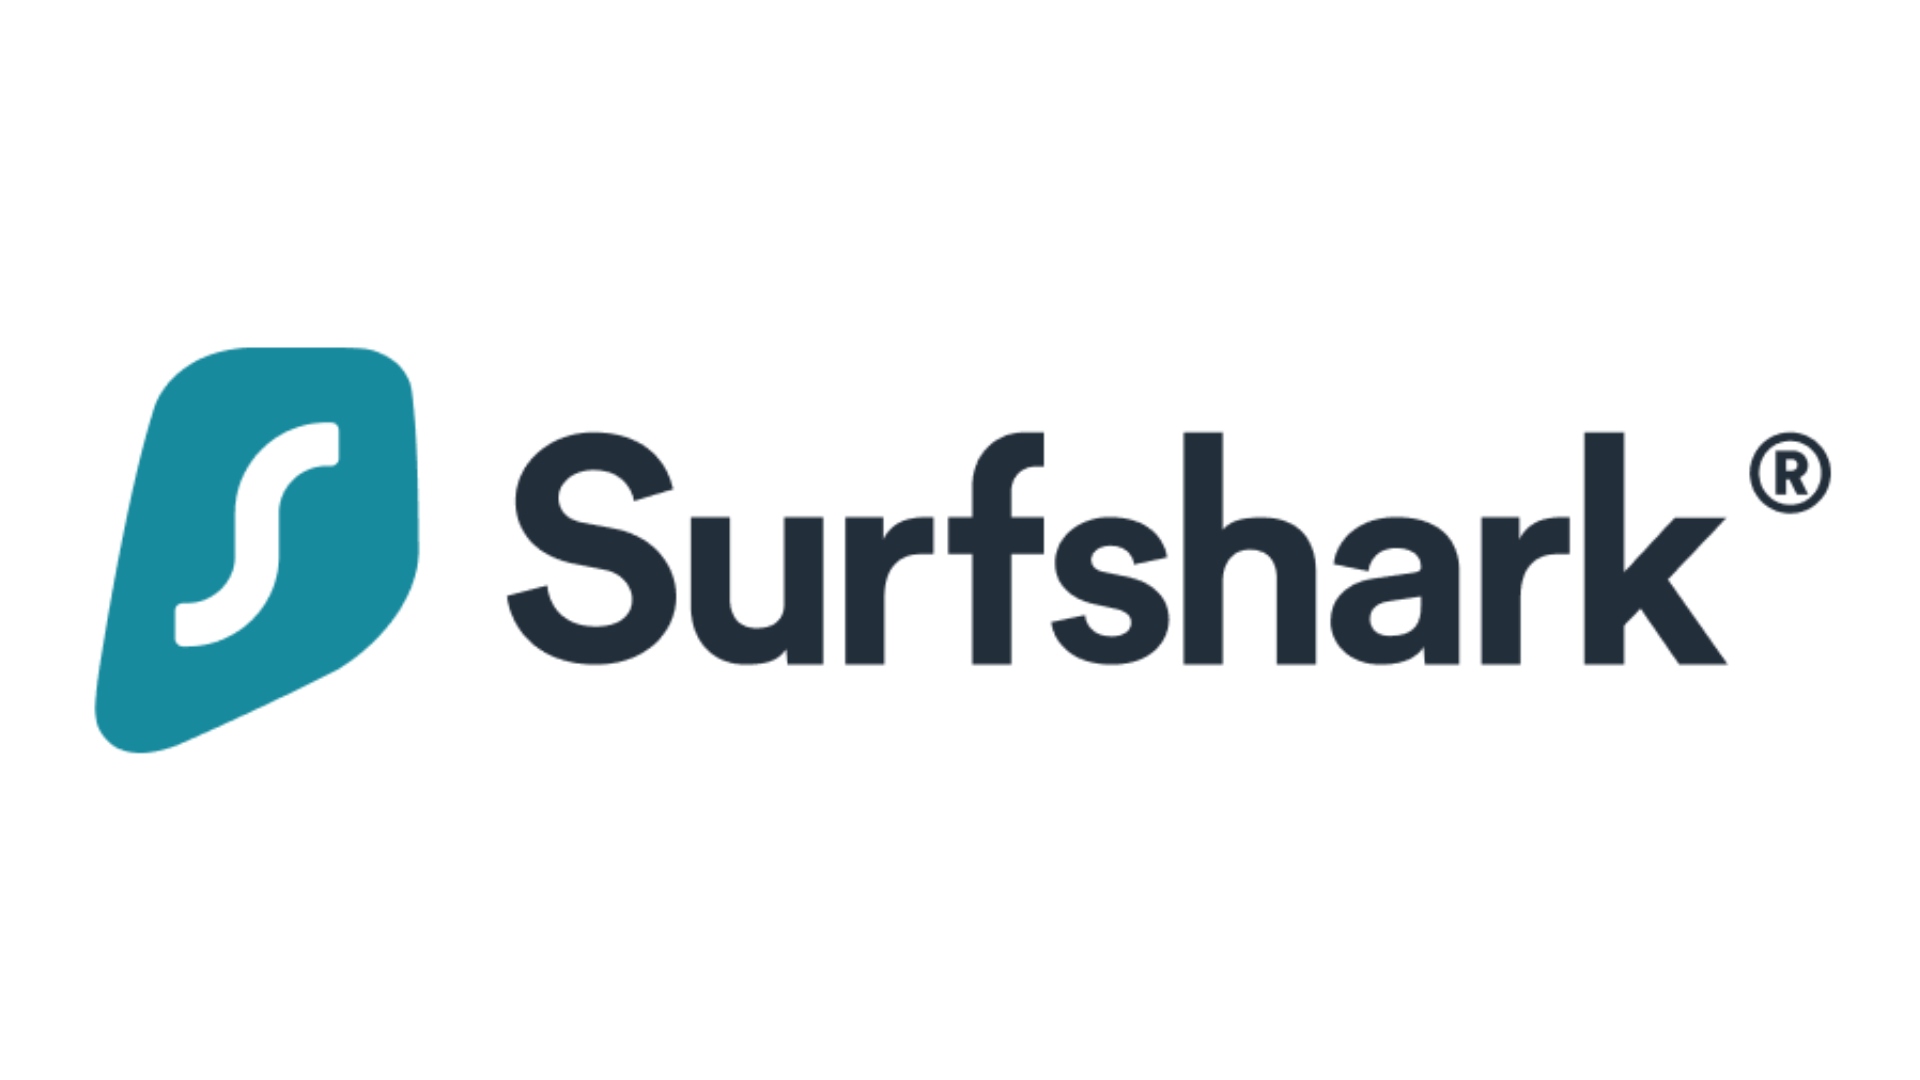 Mejor antivirus: la imagen muestra el logotipo de Surfshark